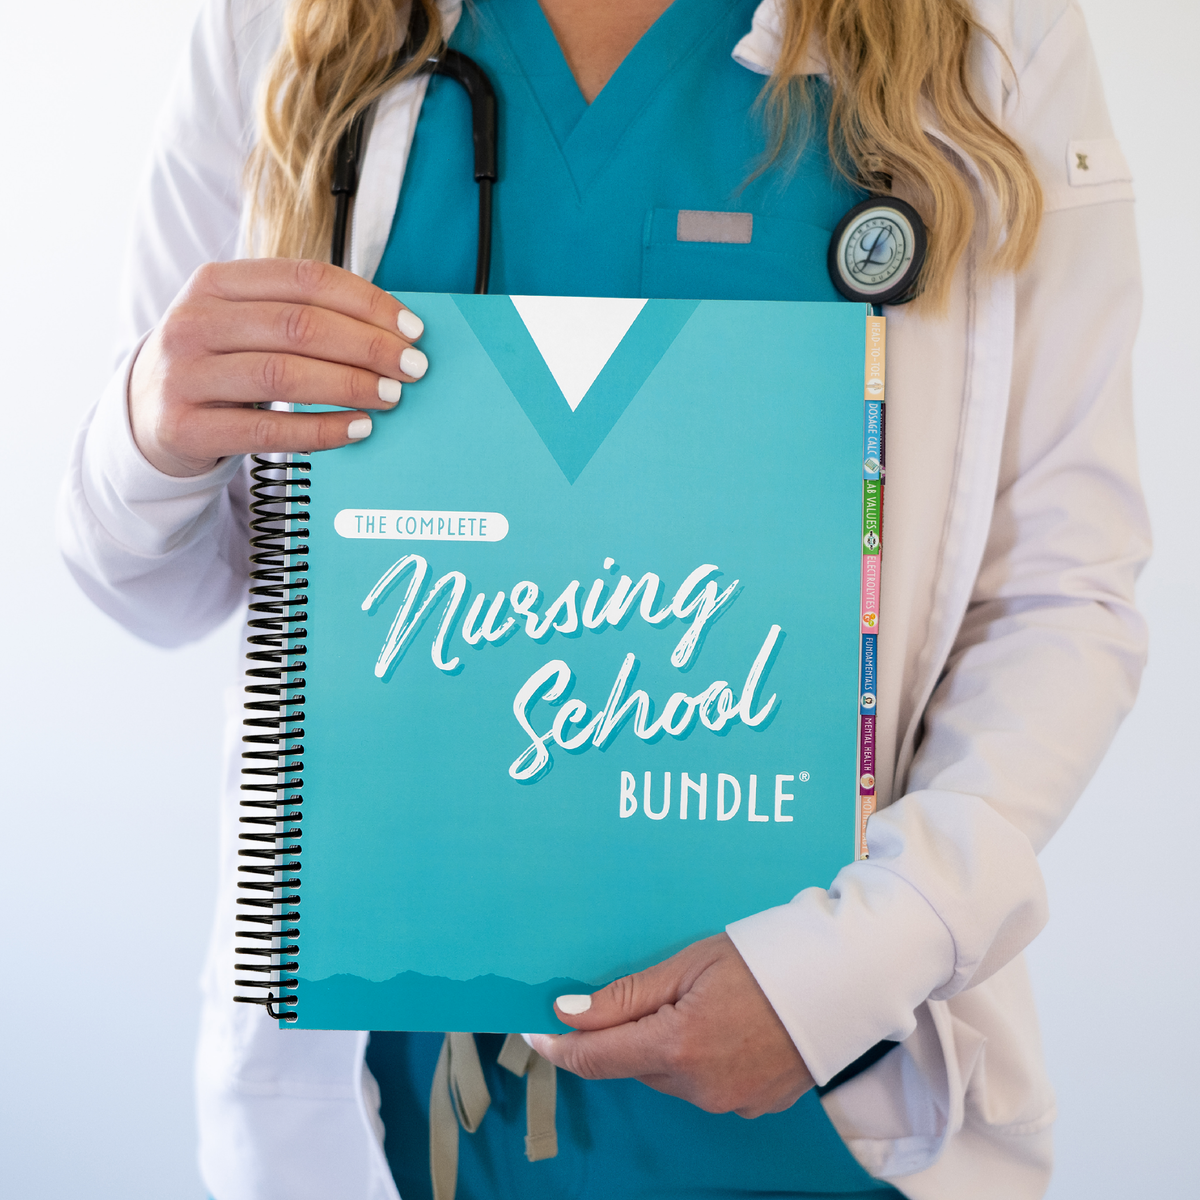 The Complete Nursing School Bundle®